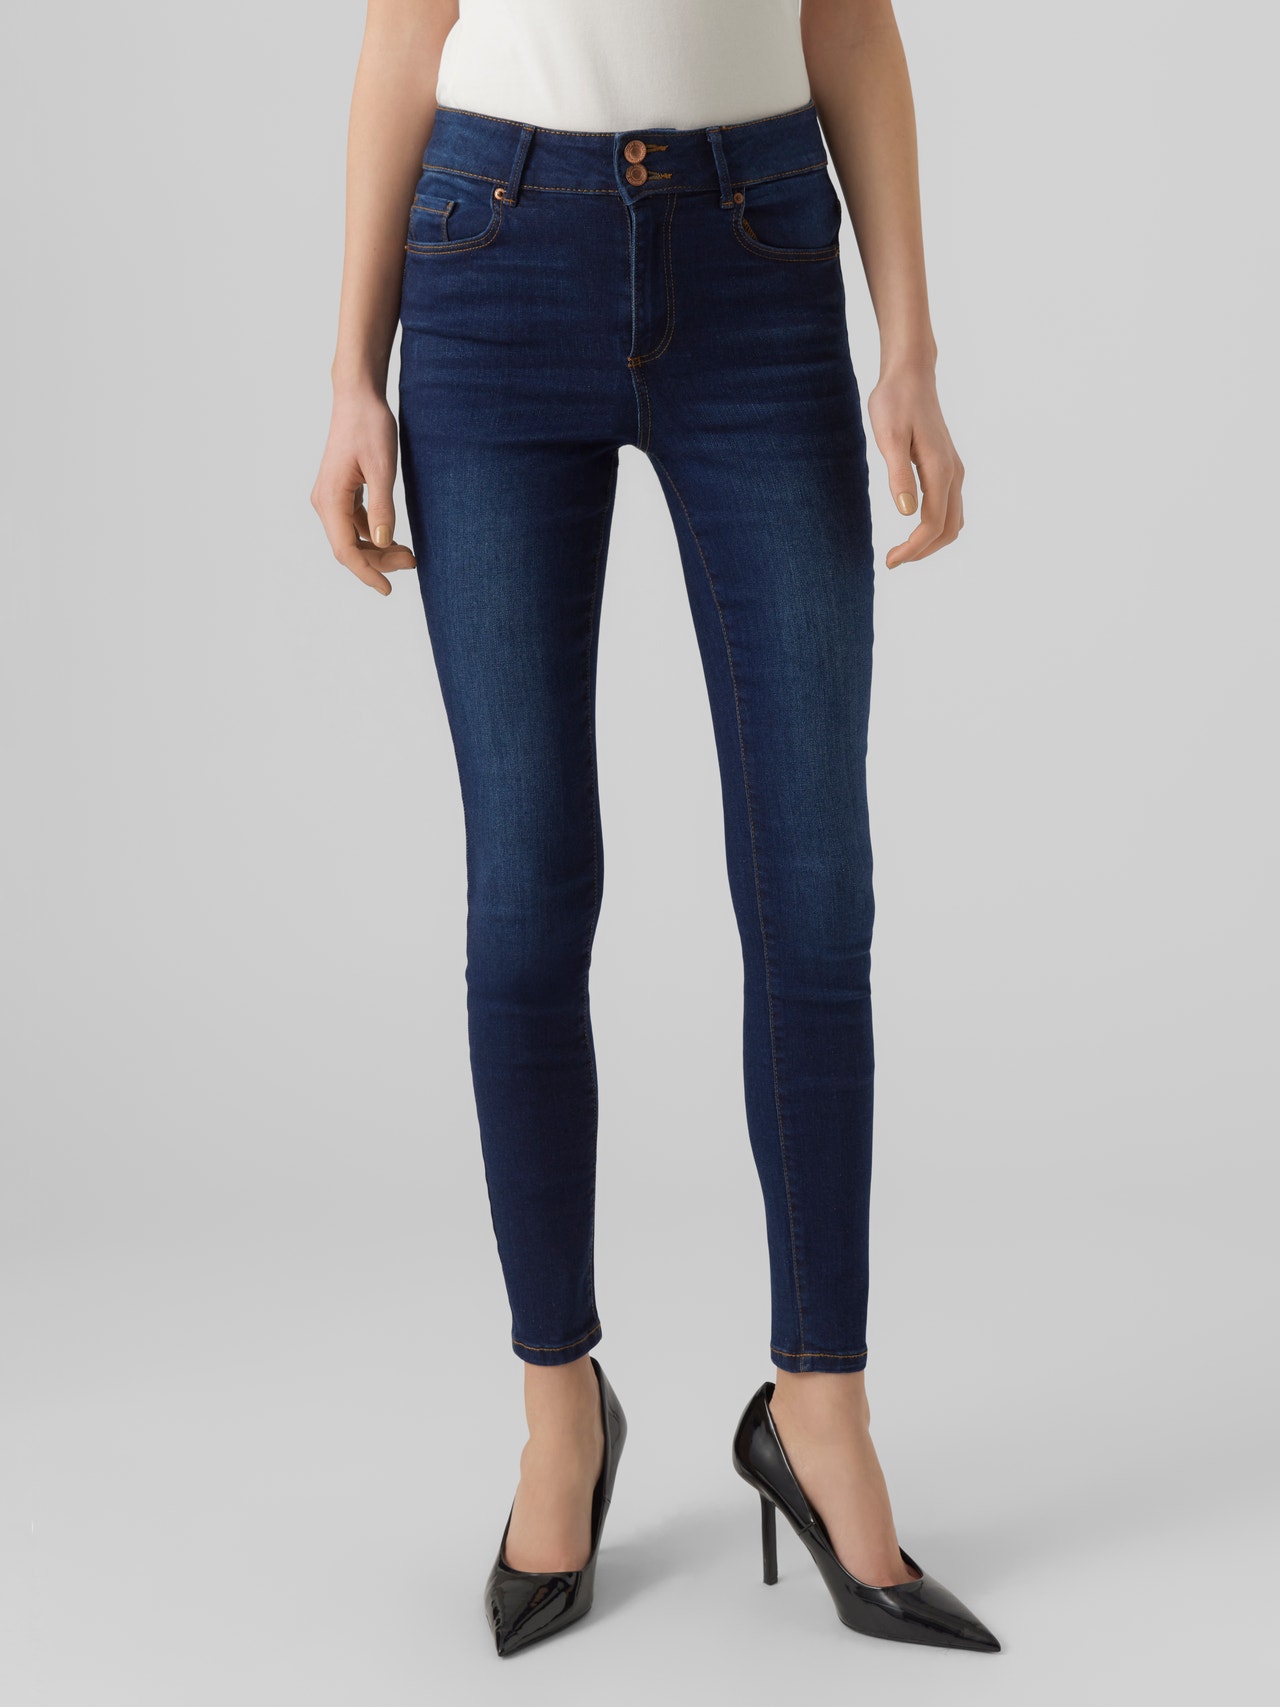 rise Jeans Dark VMSOPHIA | Moda® High Blue | Vero